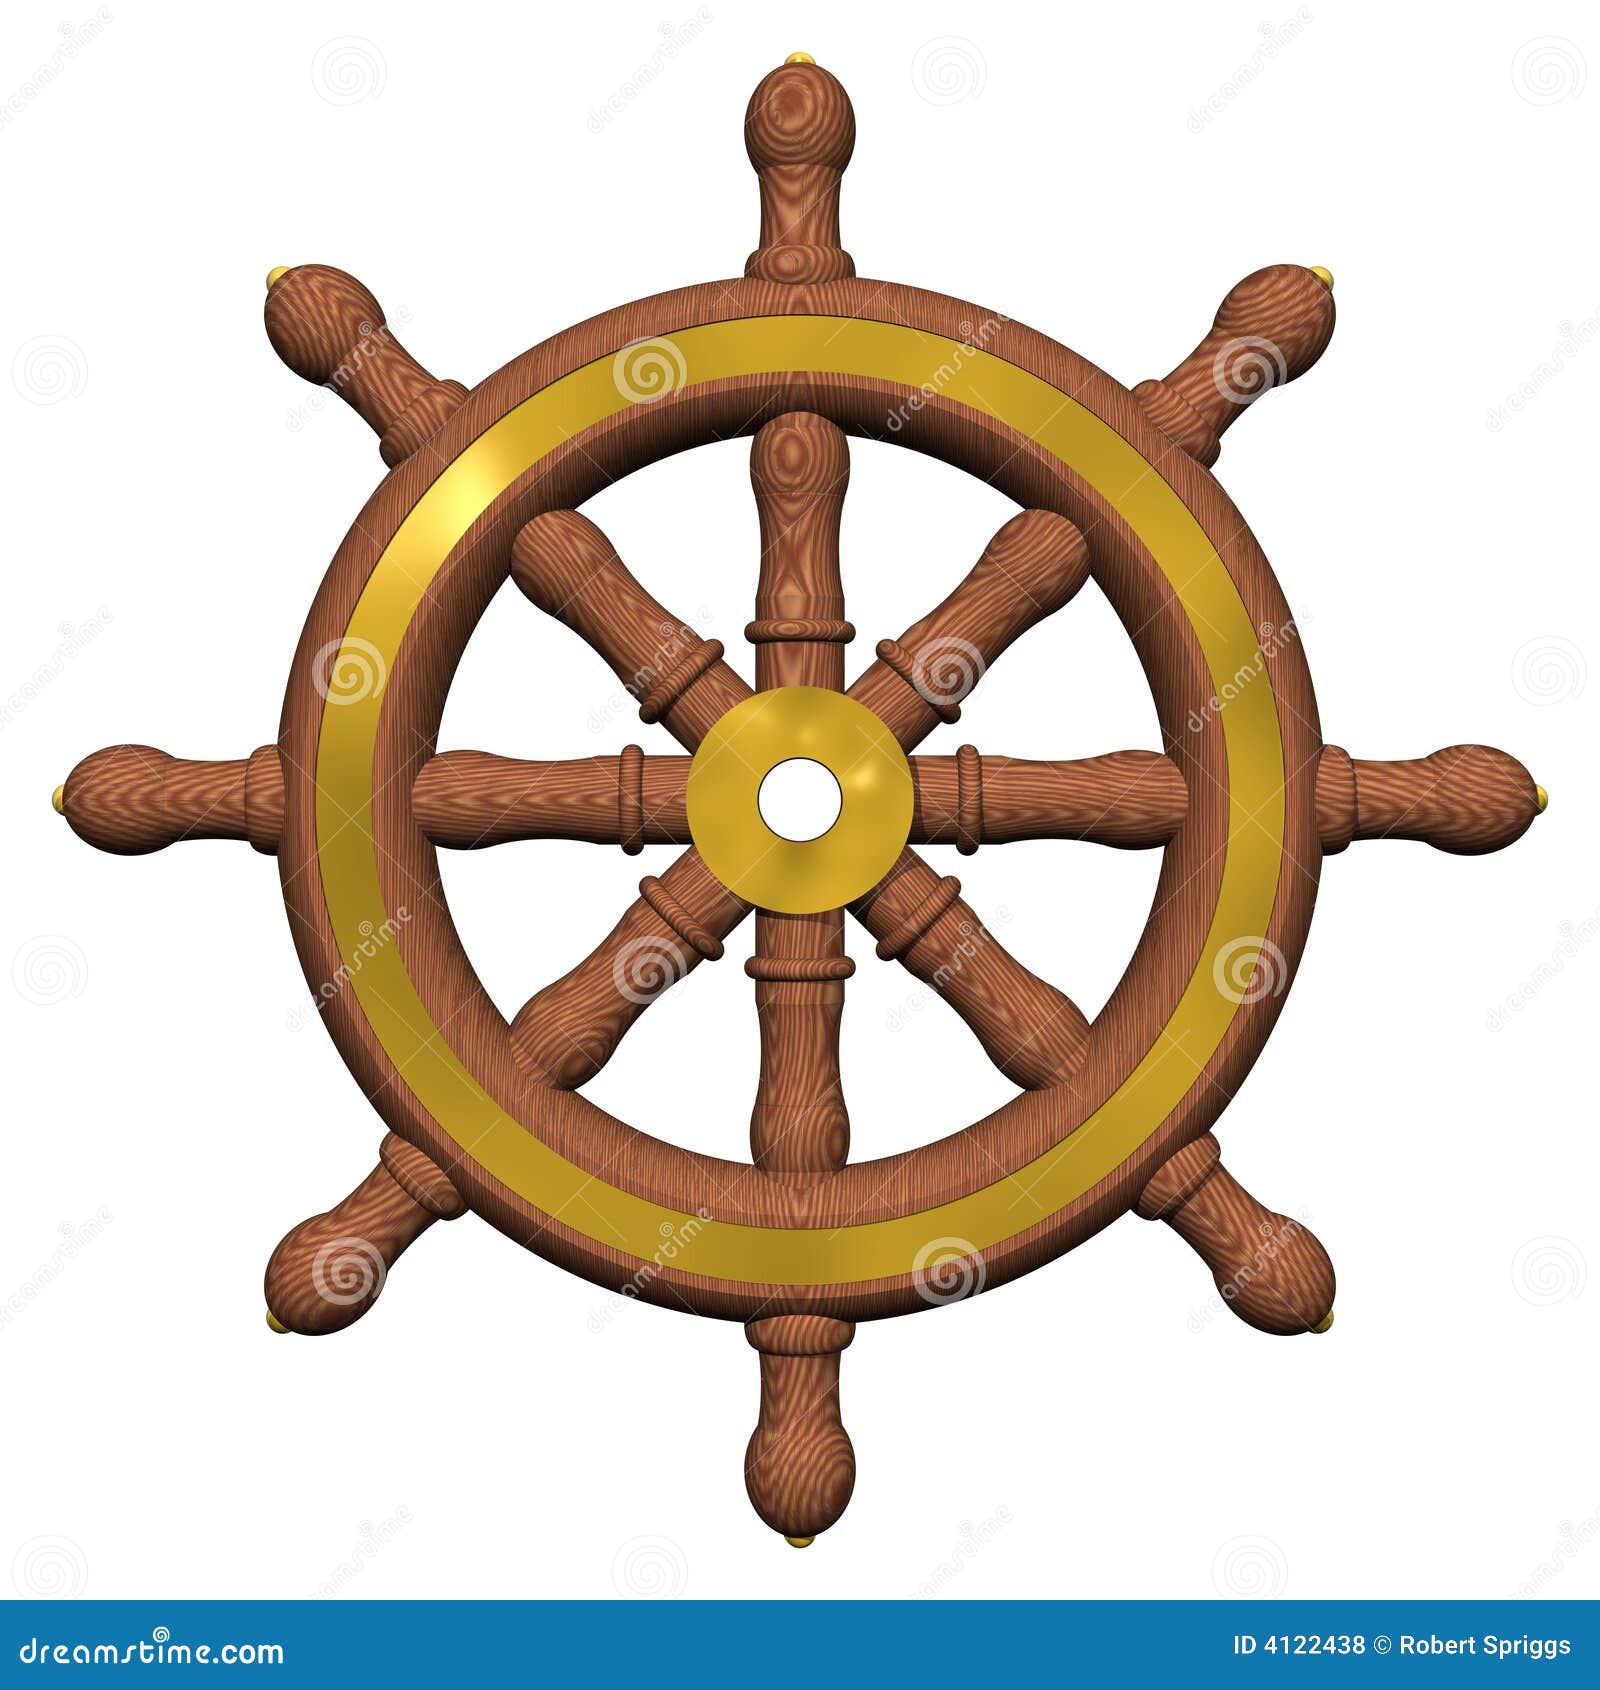 clipart ship wheel - photo #44